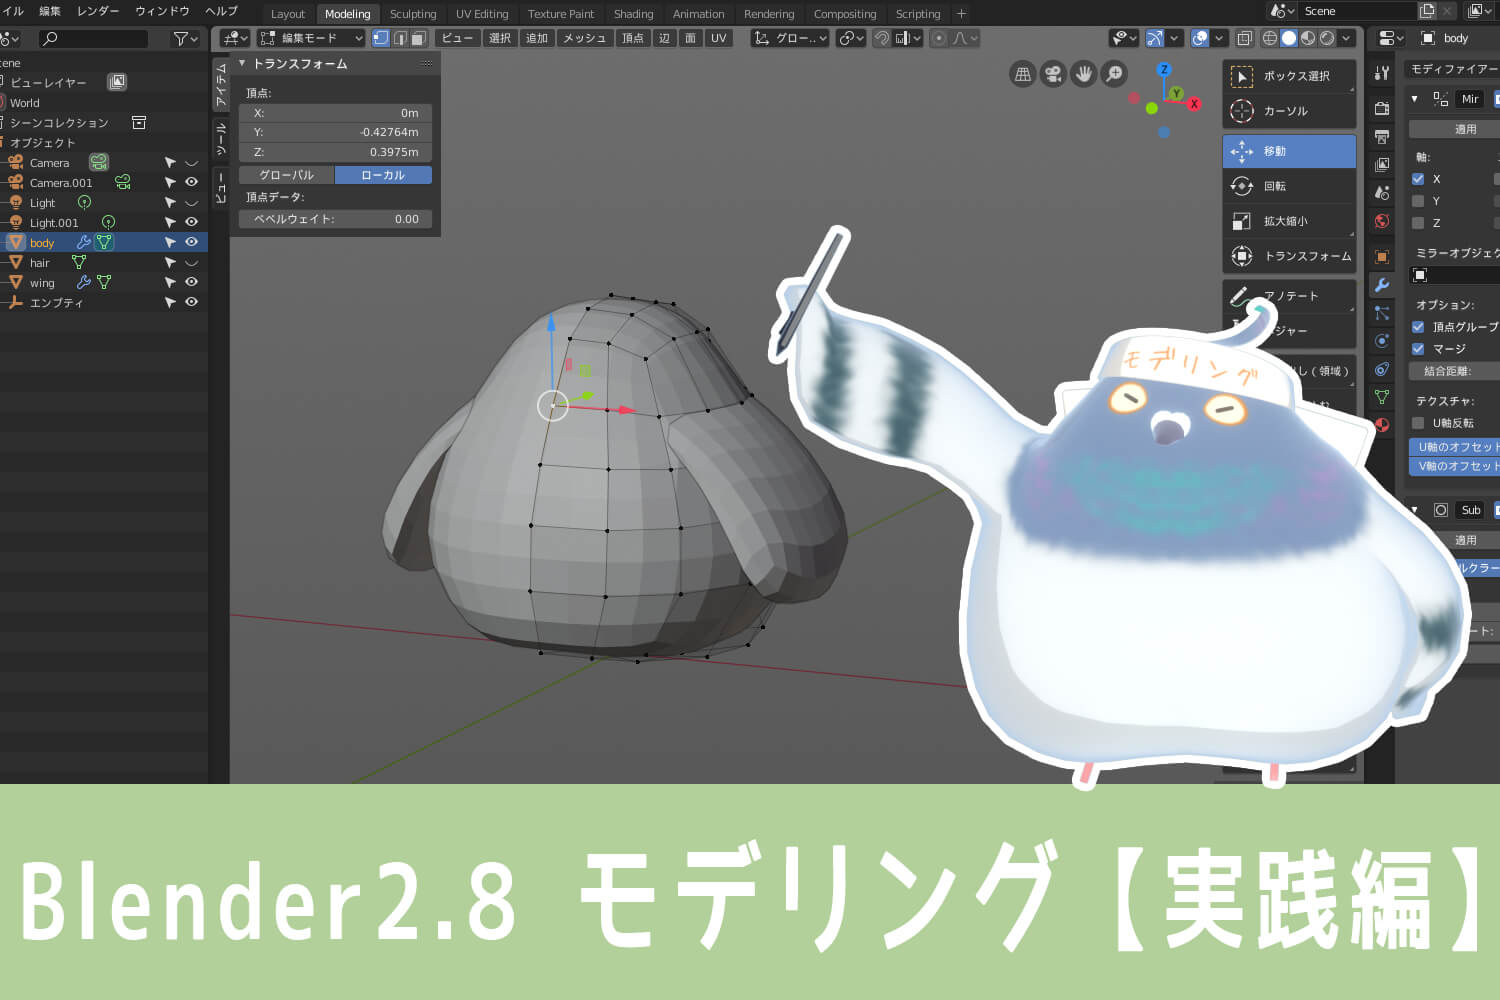 Blender 2 8でモデリング 実践編 使い方を覚えながら作りたいモデルを作る 3dcg暮らし